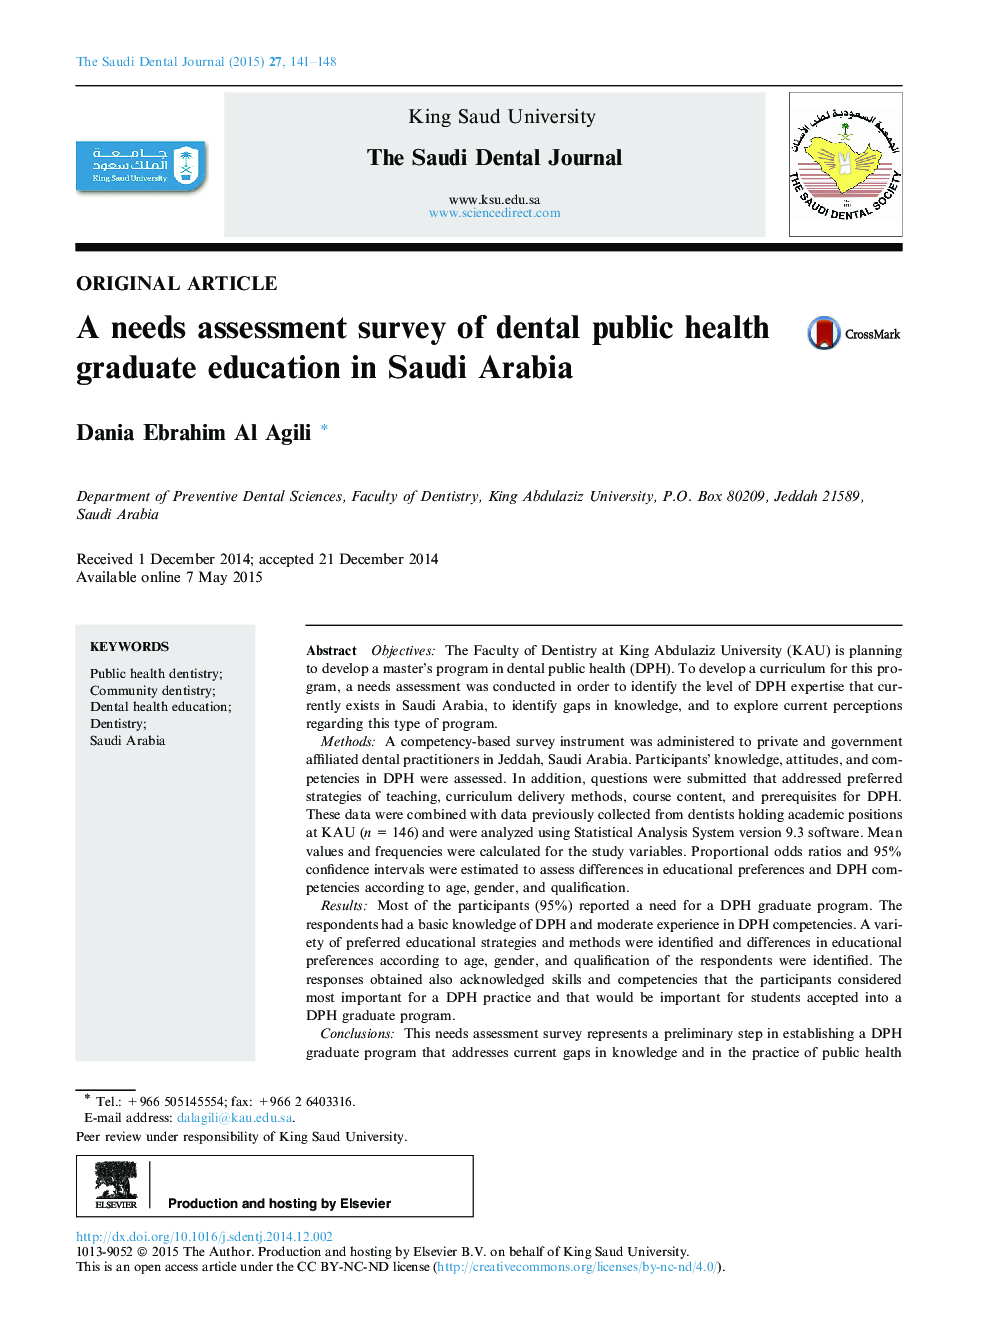 A needs assessment survey of dental public health graduate education in Saudi Arabia 